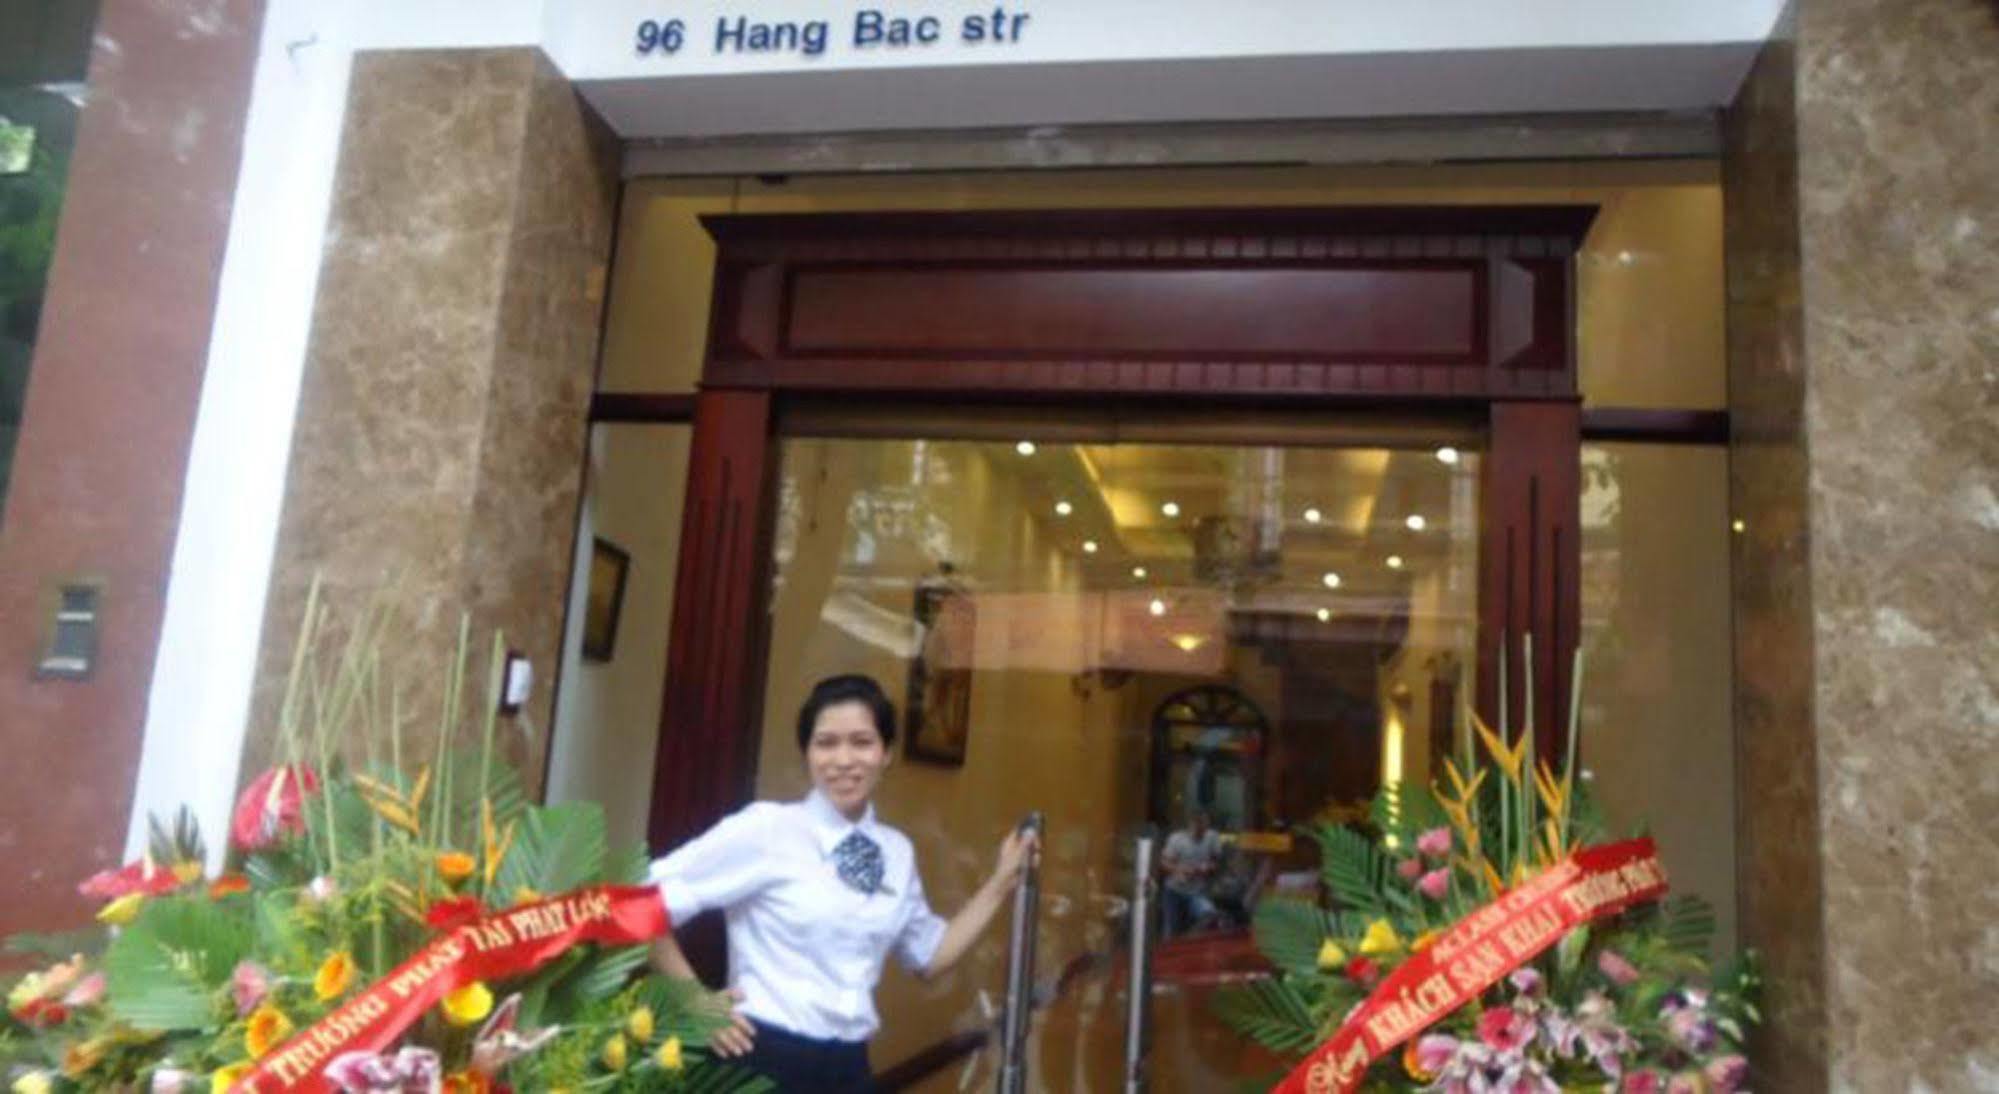 Green Diamond Hotel Hanoi Exterior photo